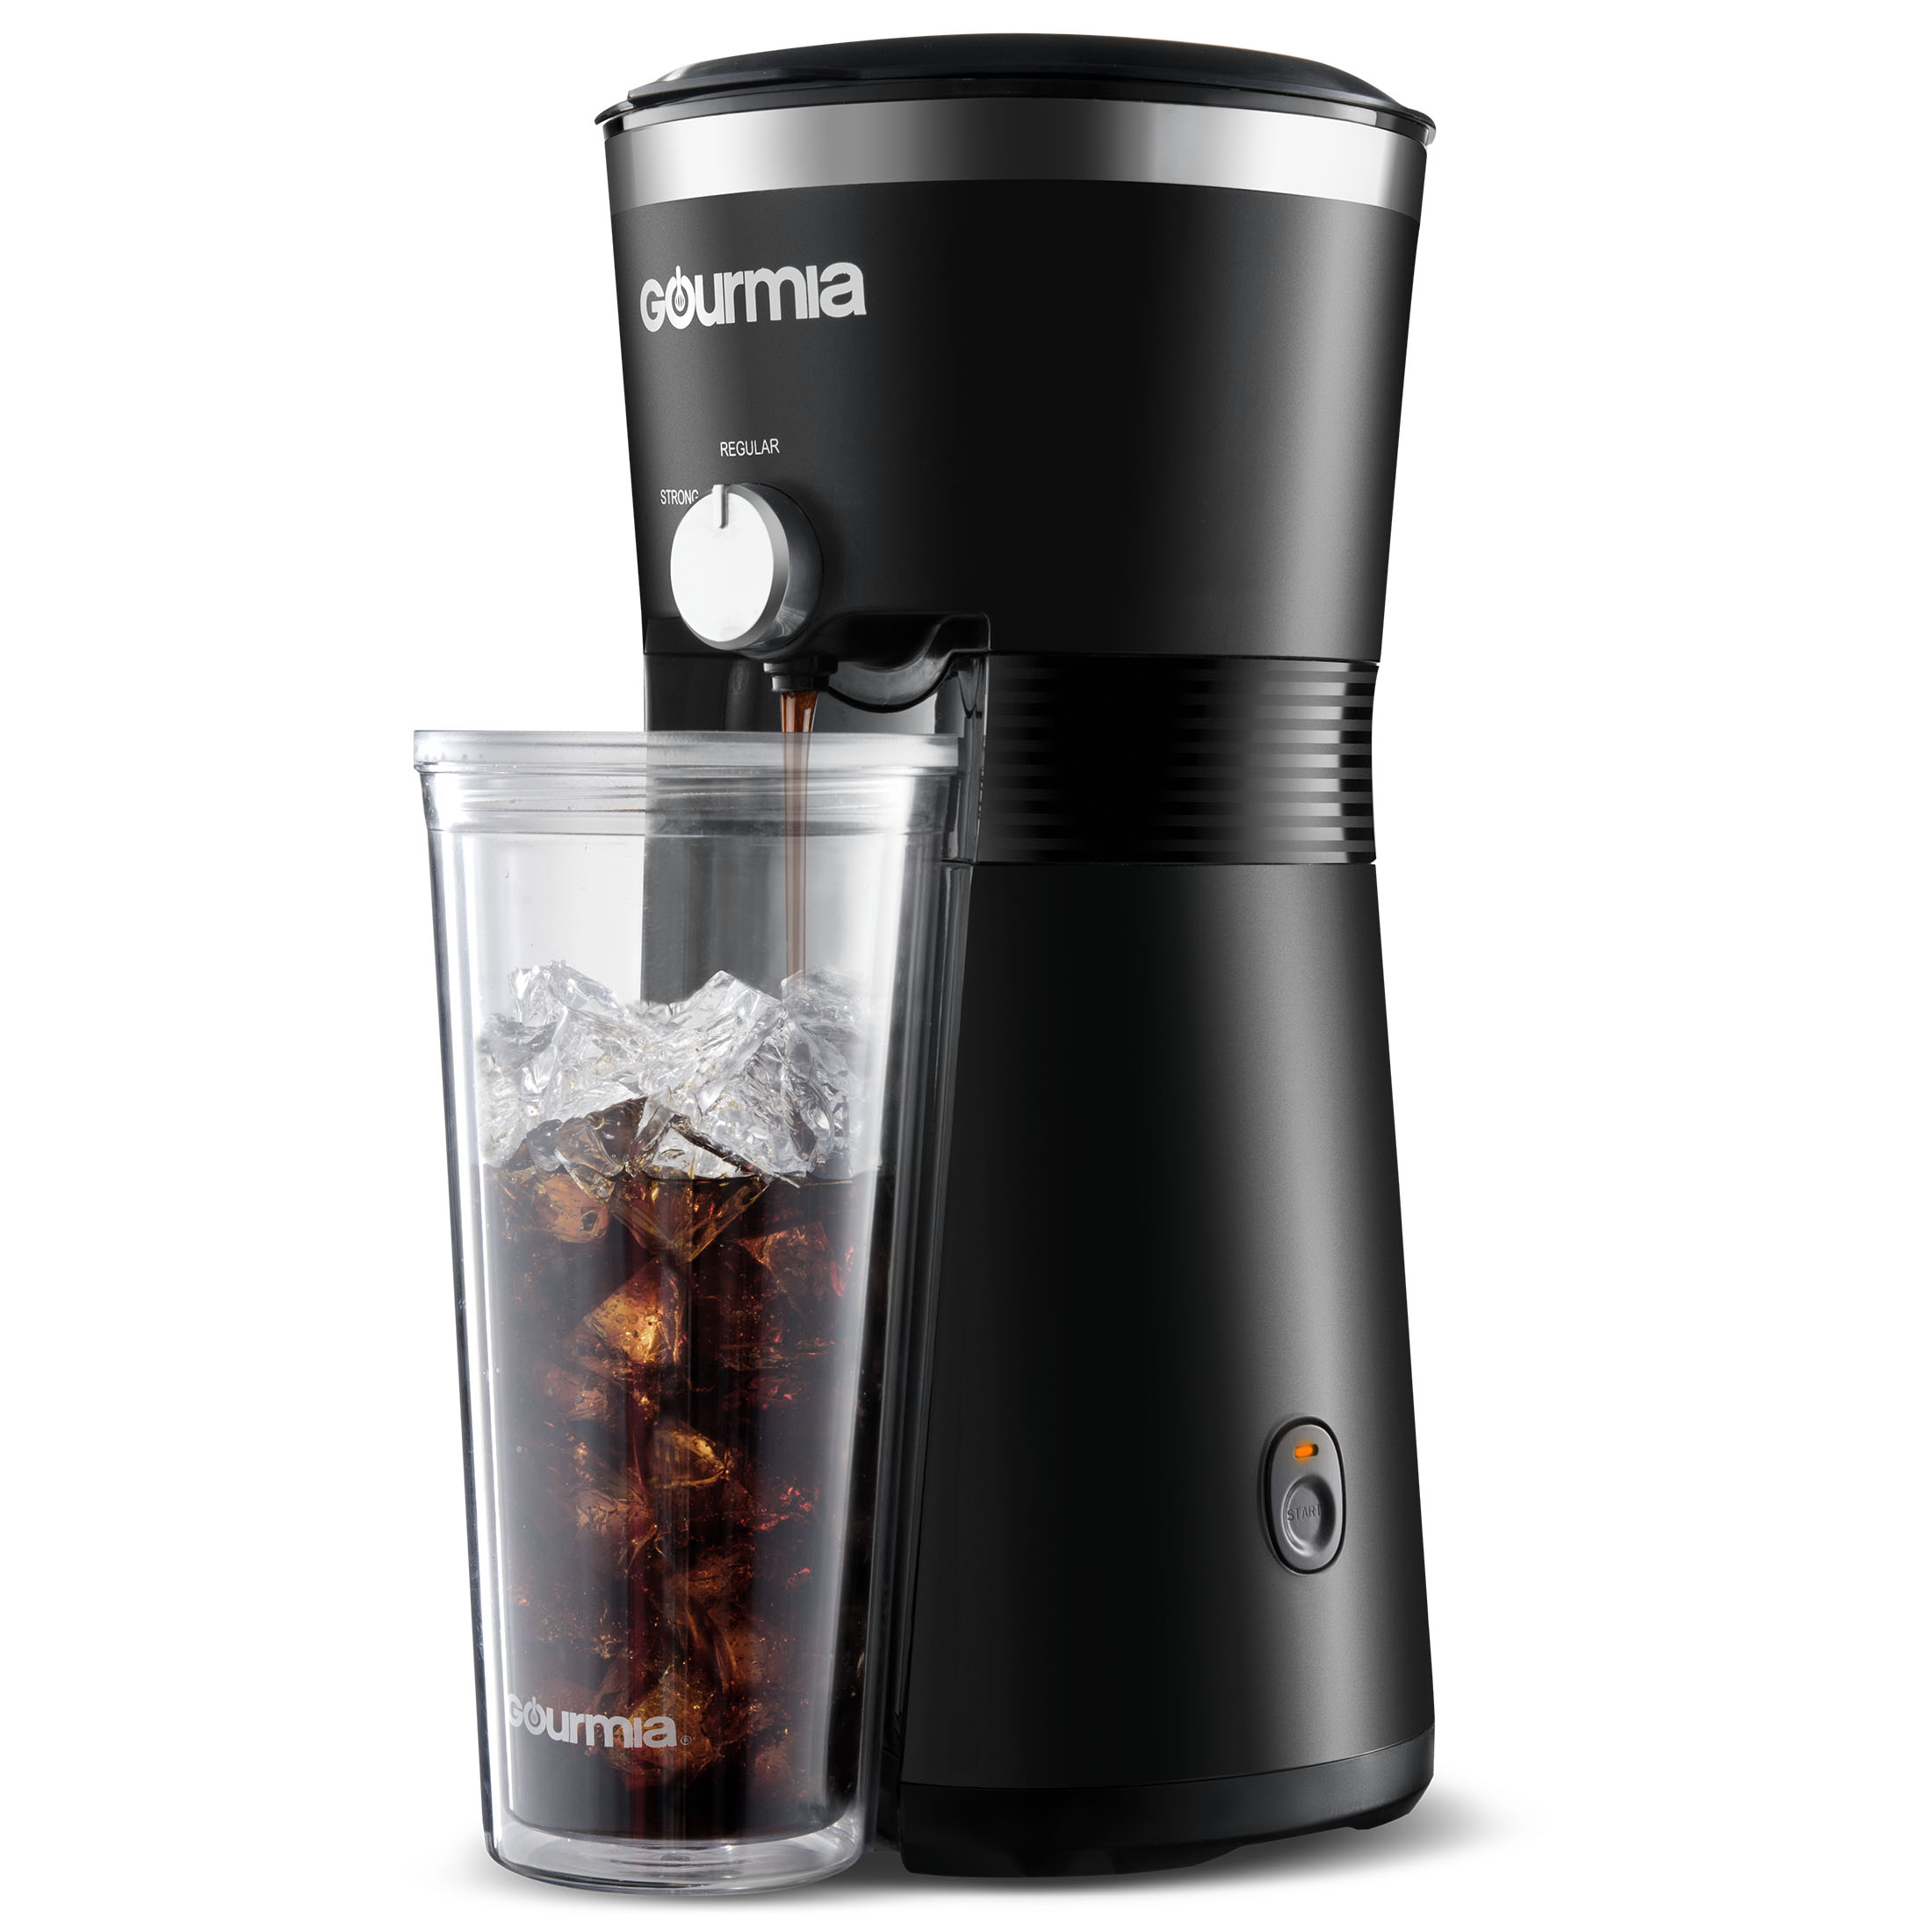 Gourmia Iced Coffee Maker with 25 fl oz. Reusable Tumbler, Black - image 3 of 7